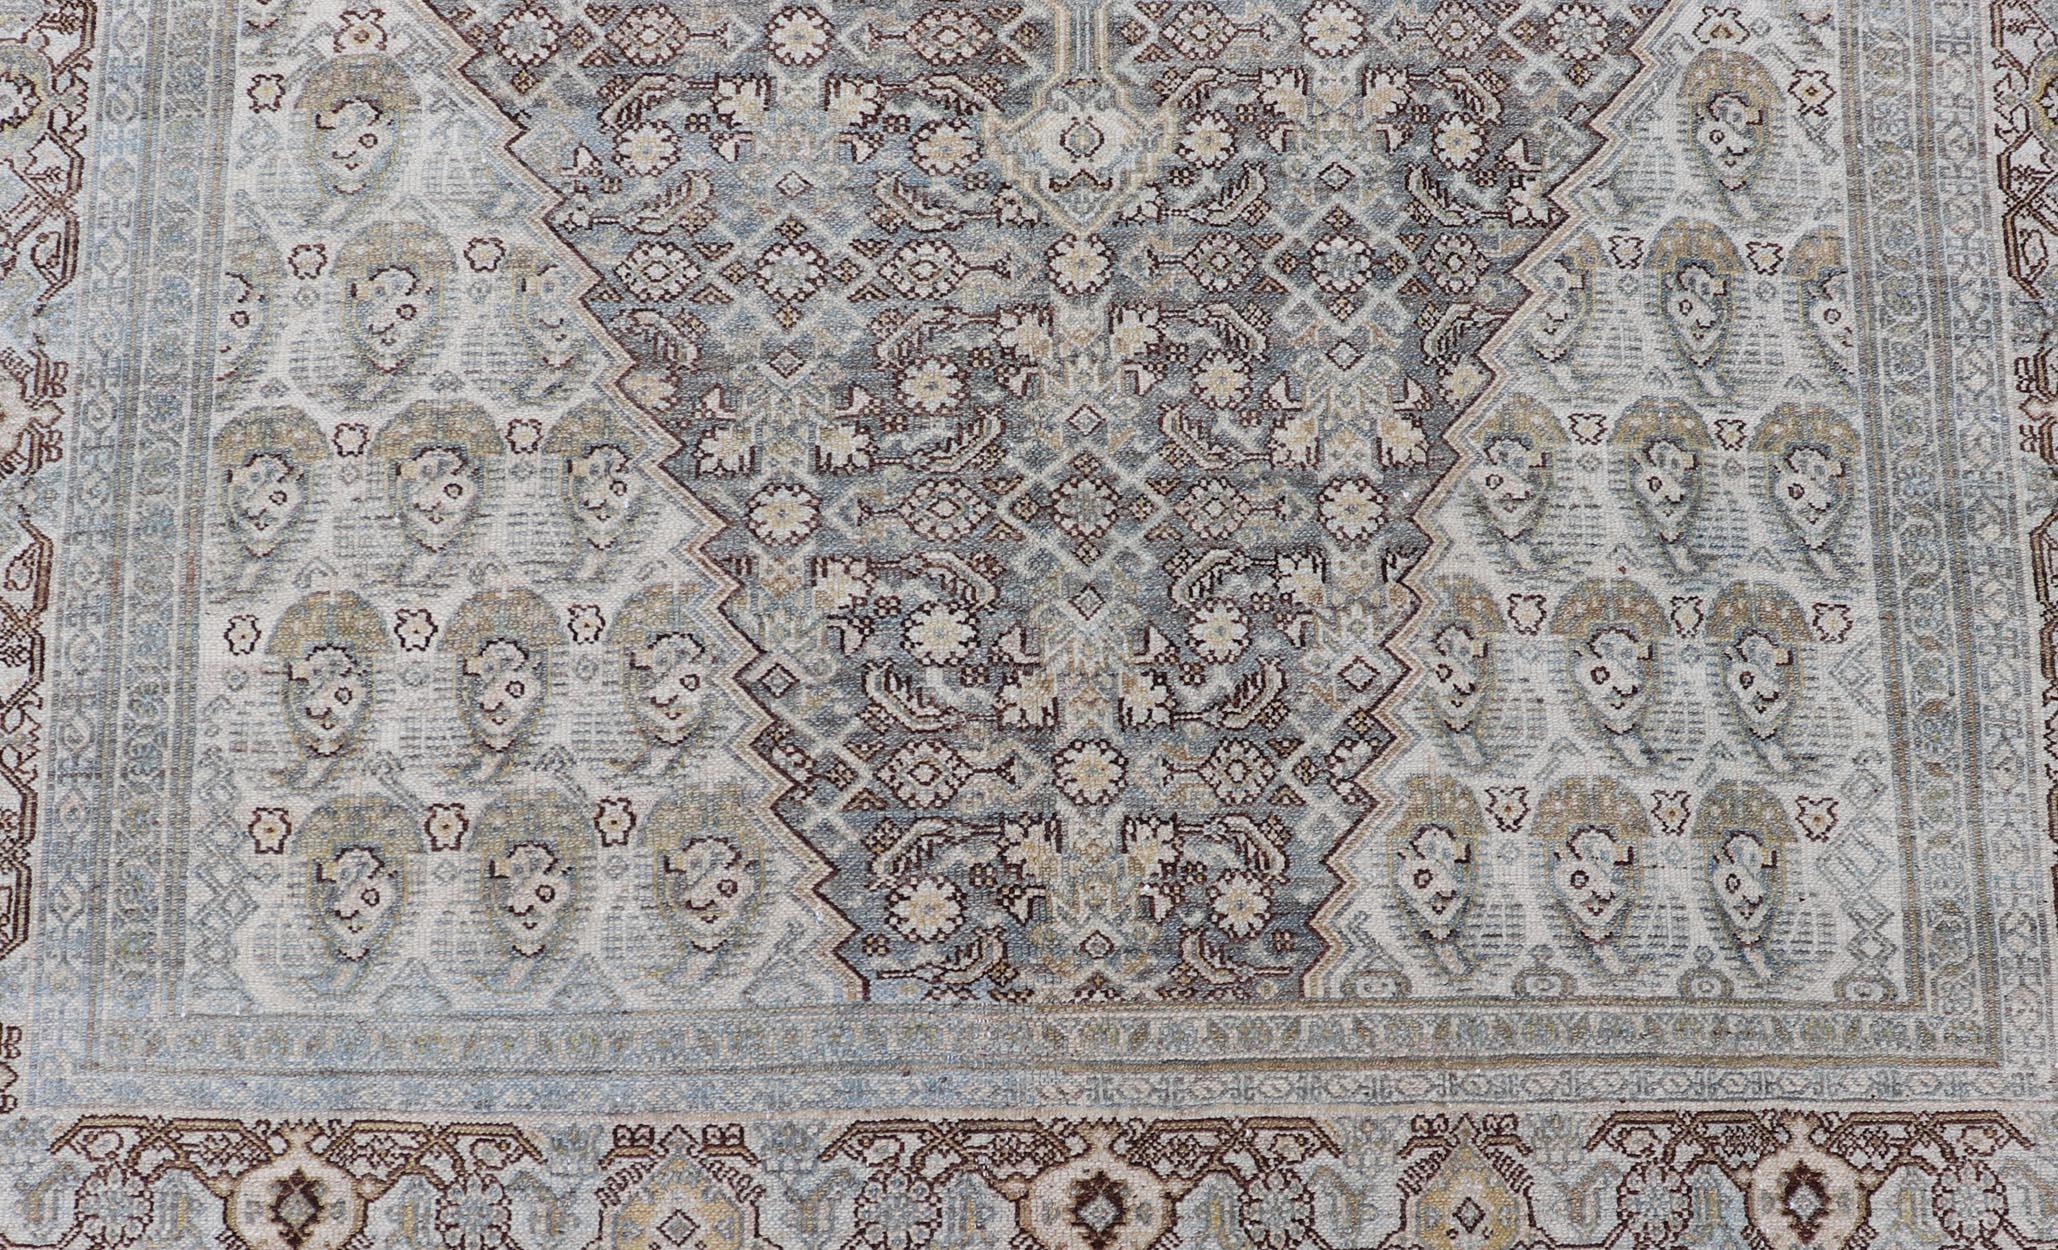 Persian Gallery Antique Malayer rug with Medallion Design With Paisley & Herati Design. Keivan Woven Arts / rug R20-0914, Keivan Woven Arts / country of origin / type: Iran / Malayer, circa 1920.
Measures: 7'0 x 20'0 
This antique Malayer carpet